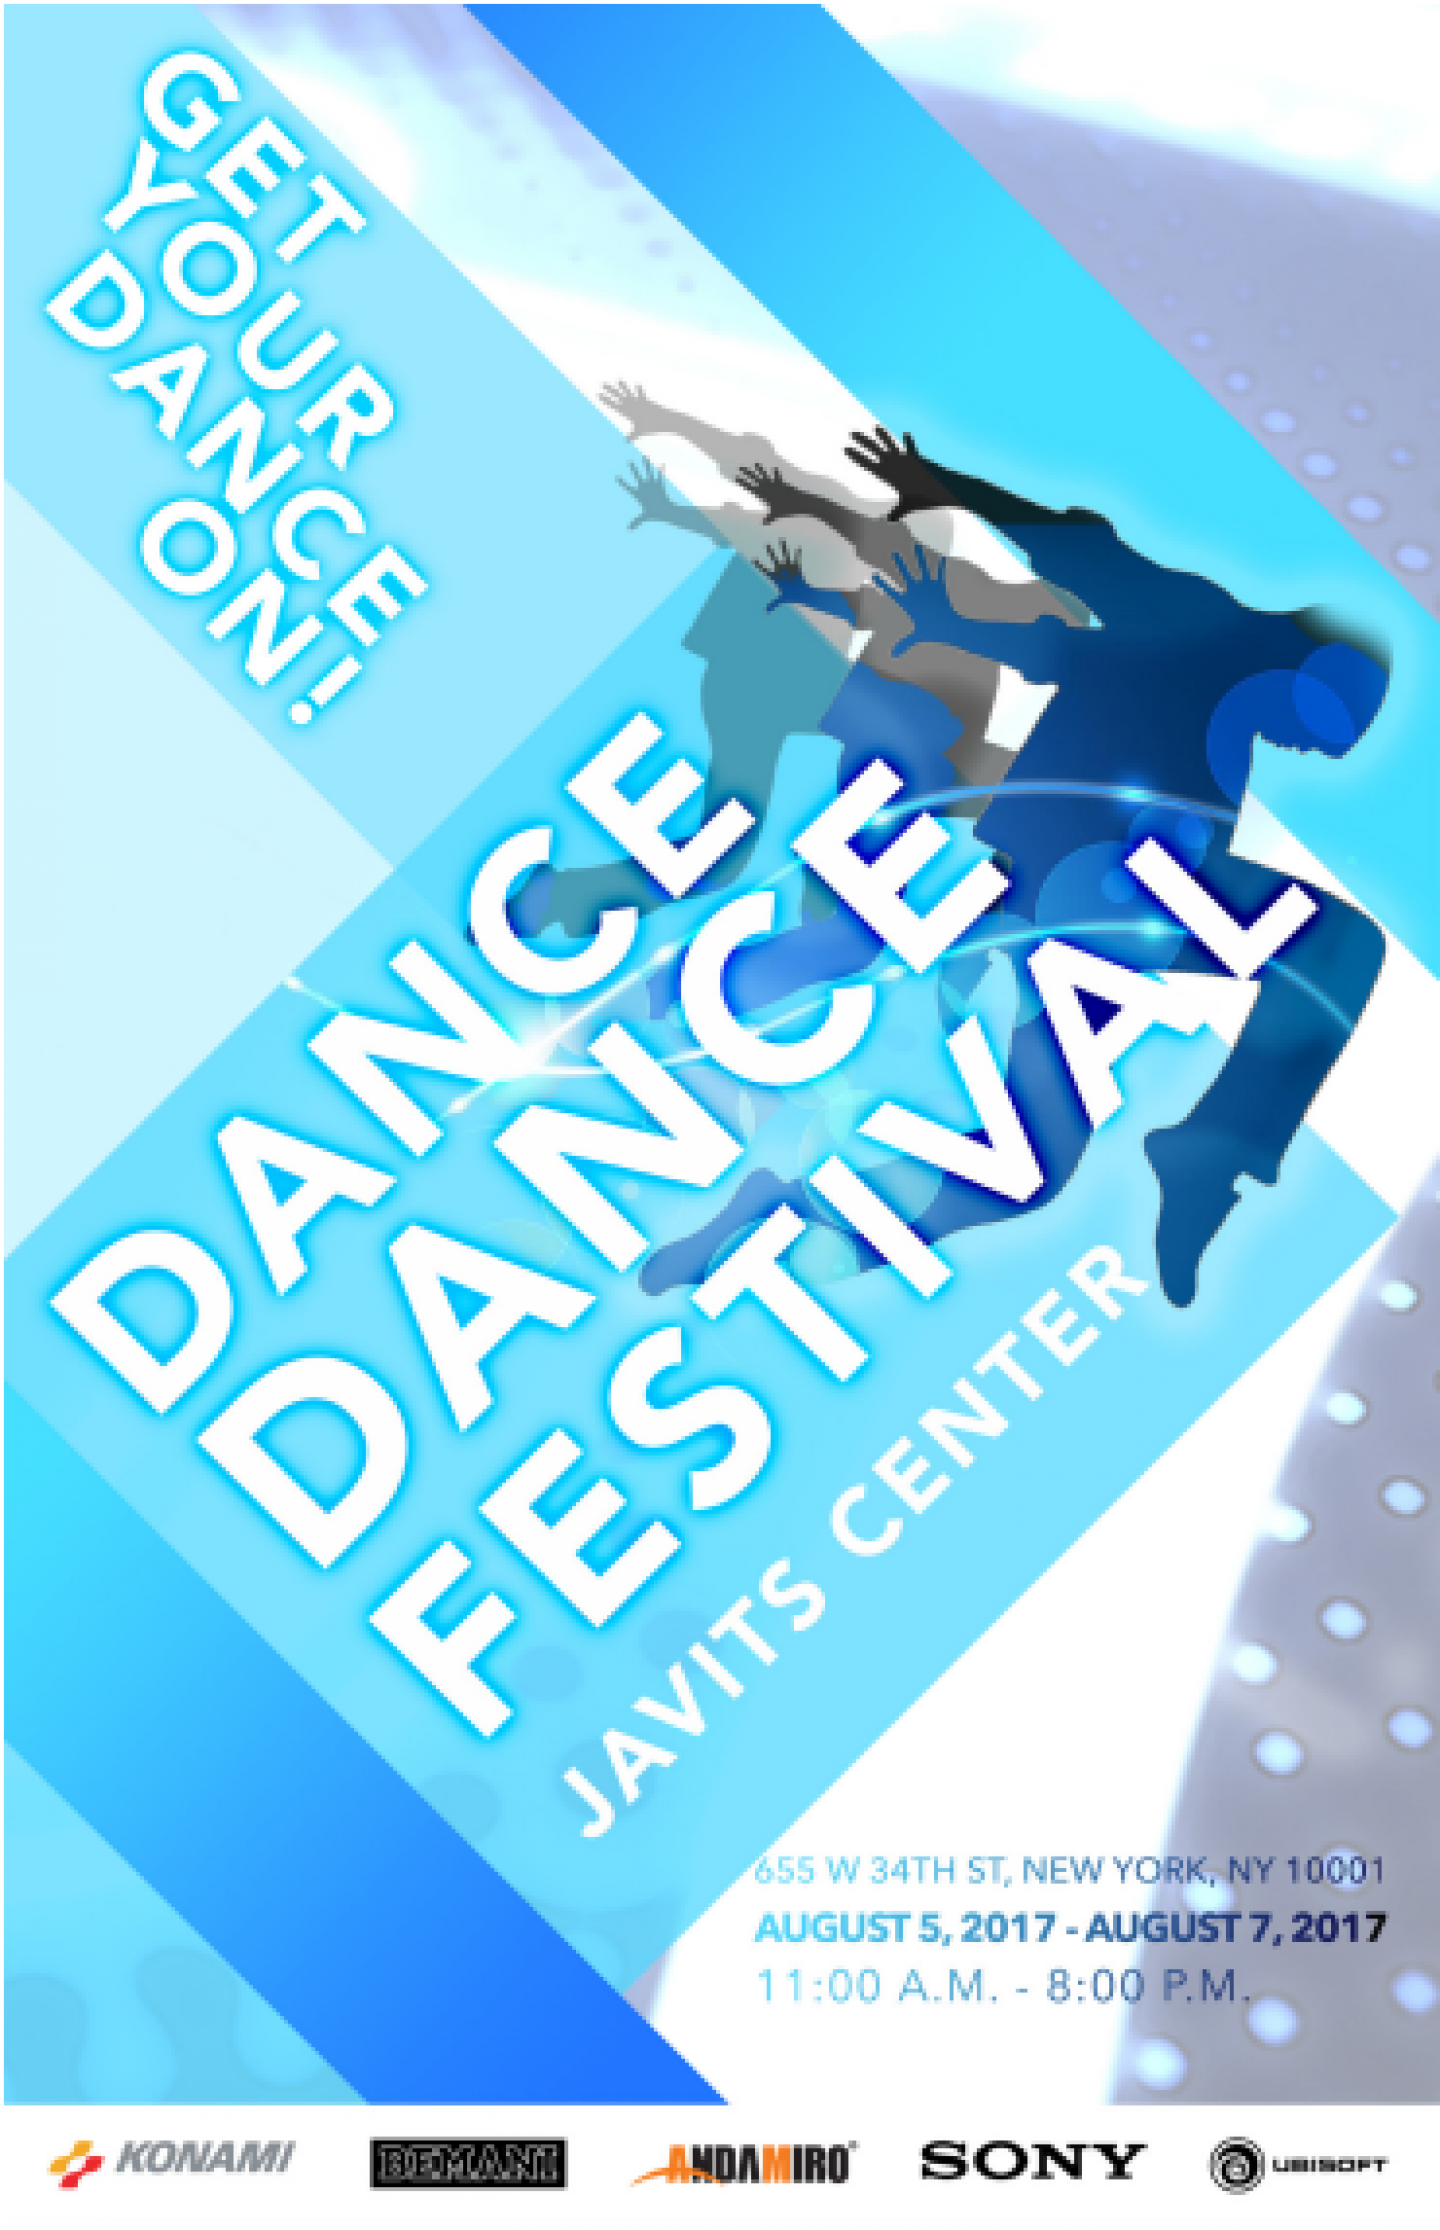 Dance Dance Festival